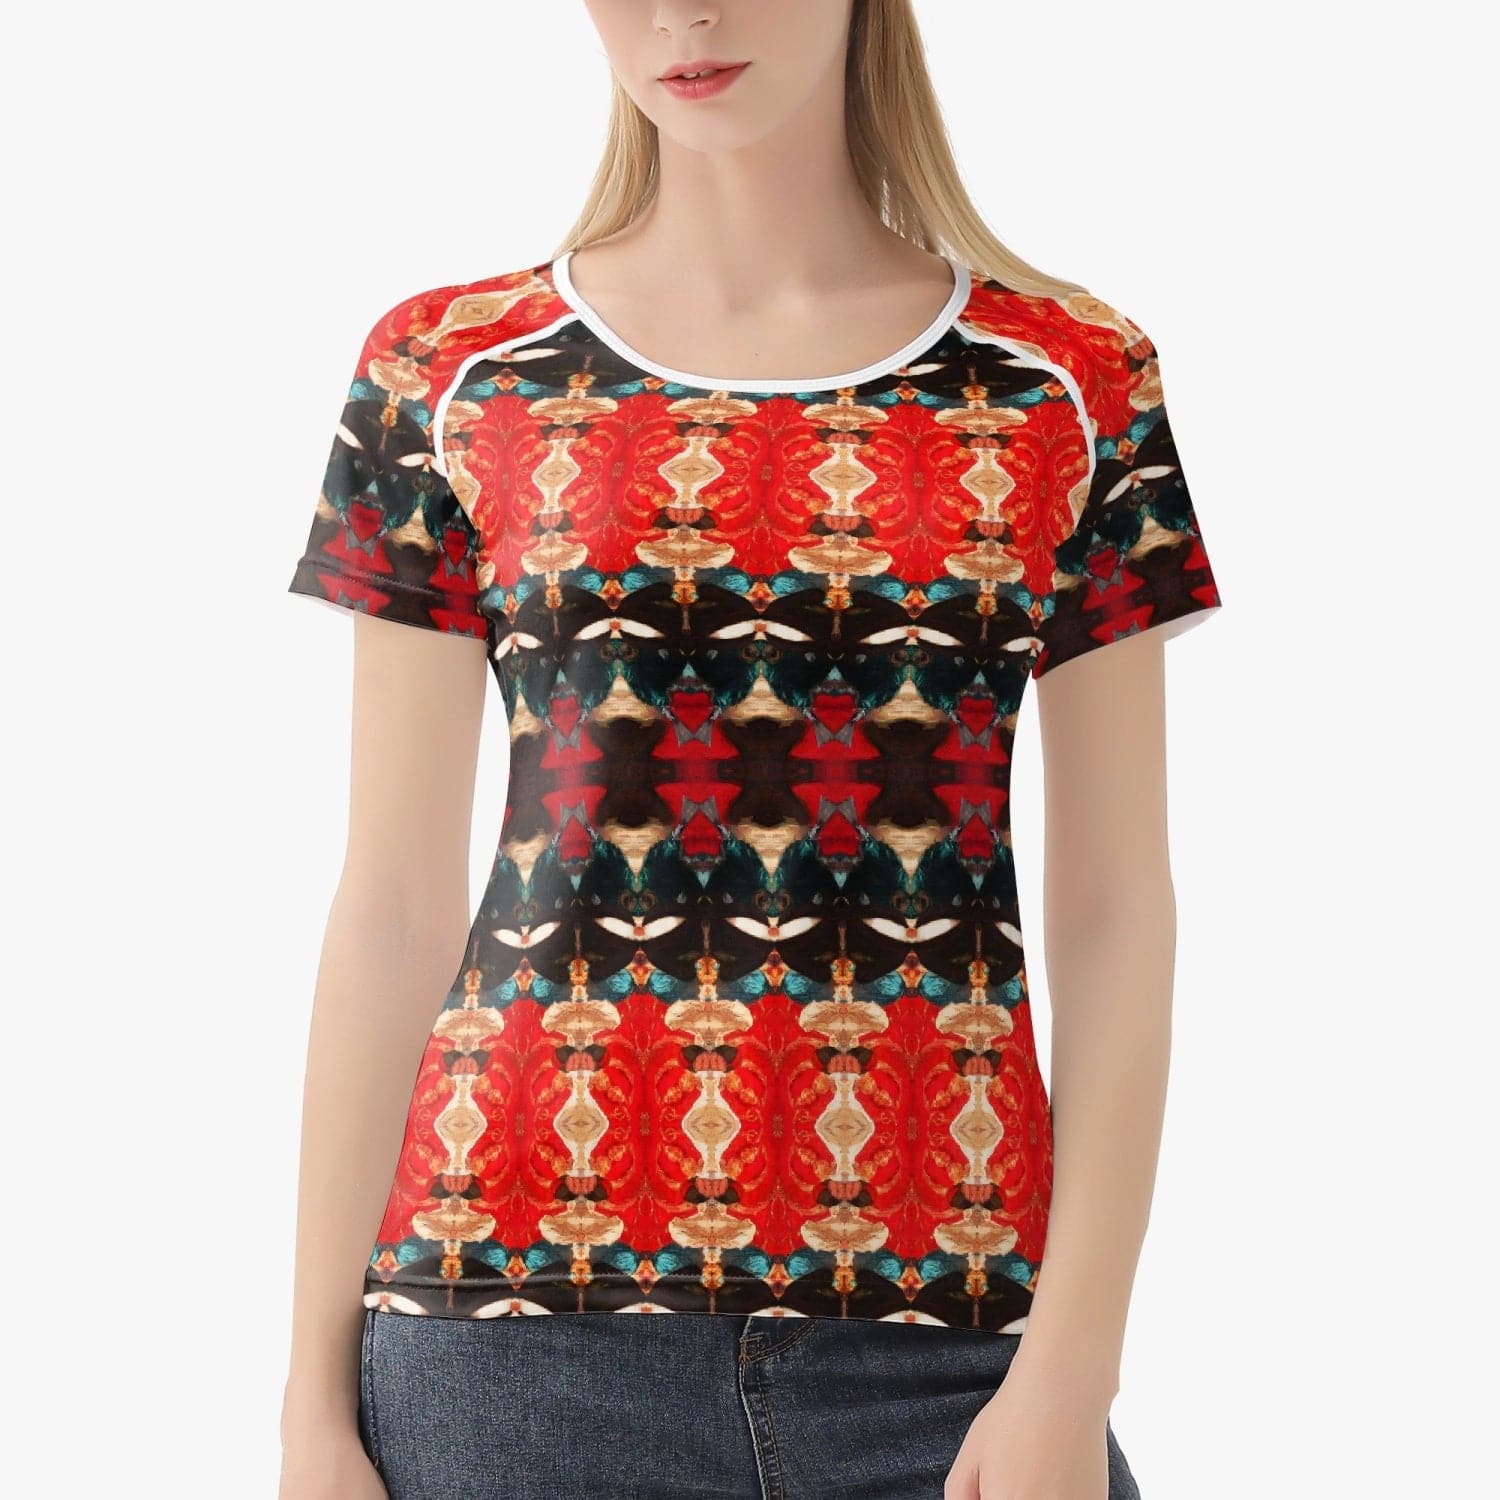 Red Orange and Black Hymalaian Patterned, Handmade Hot Women T-shirt Sports/ Yoga Top, by Sensus Studio Design